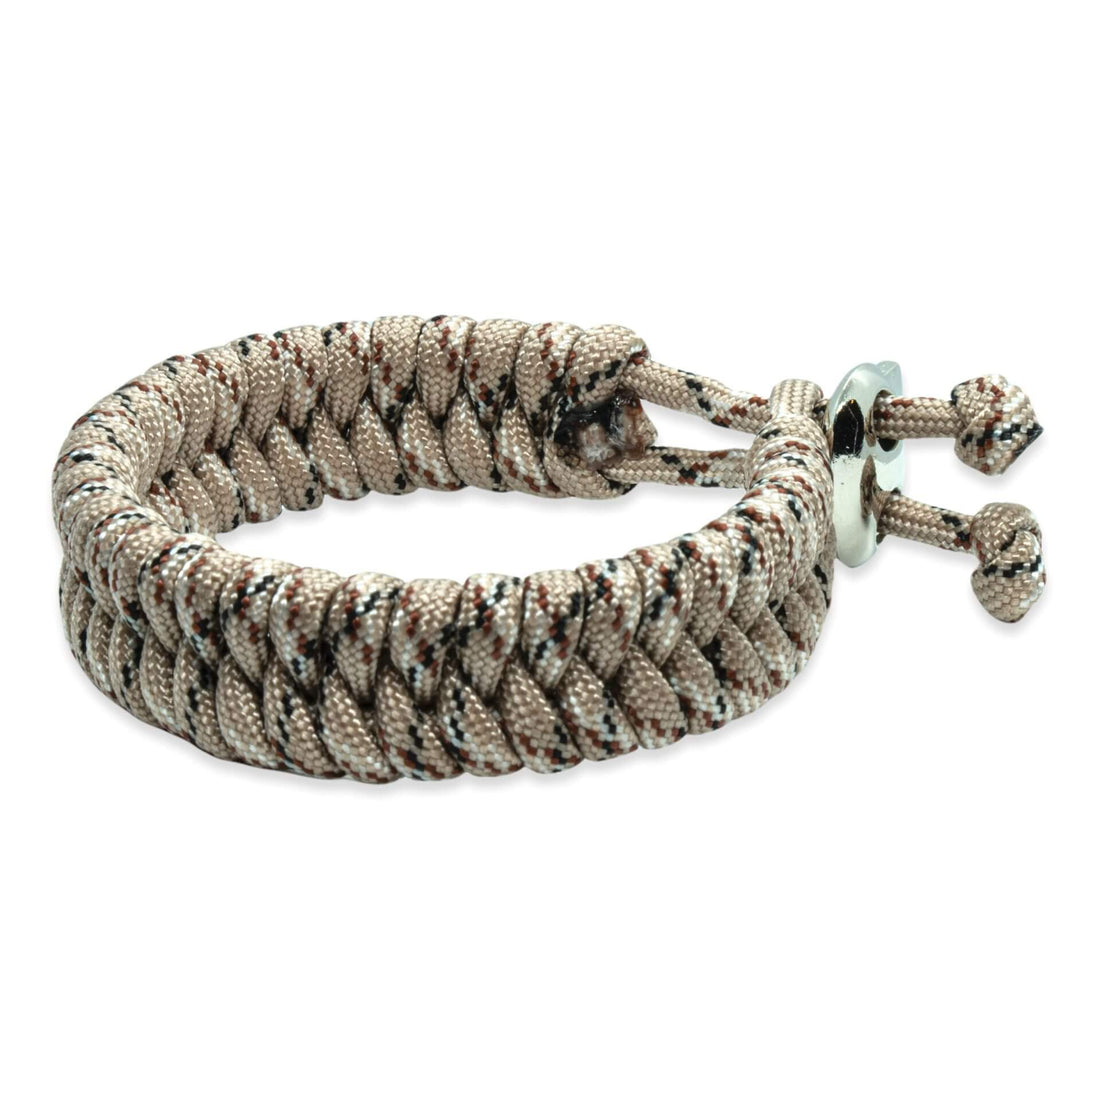 Swedish tail bracelet - Desert / black rope color